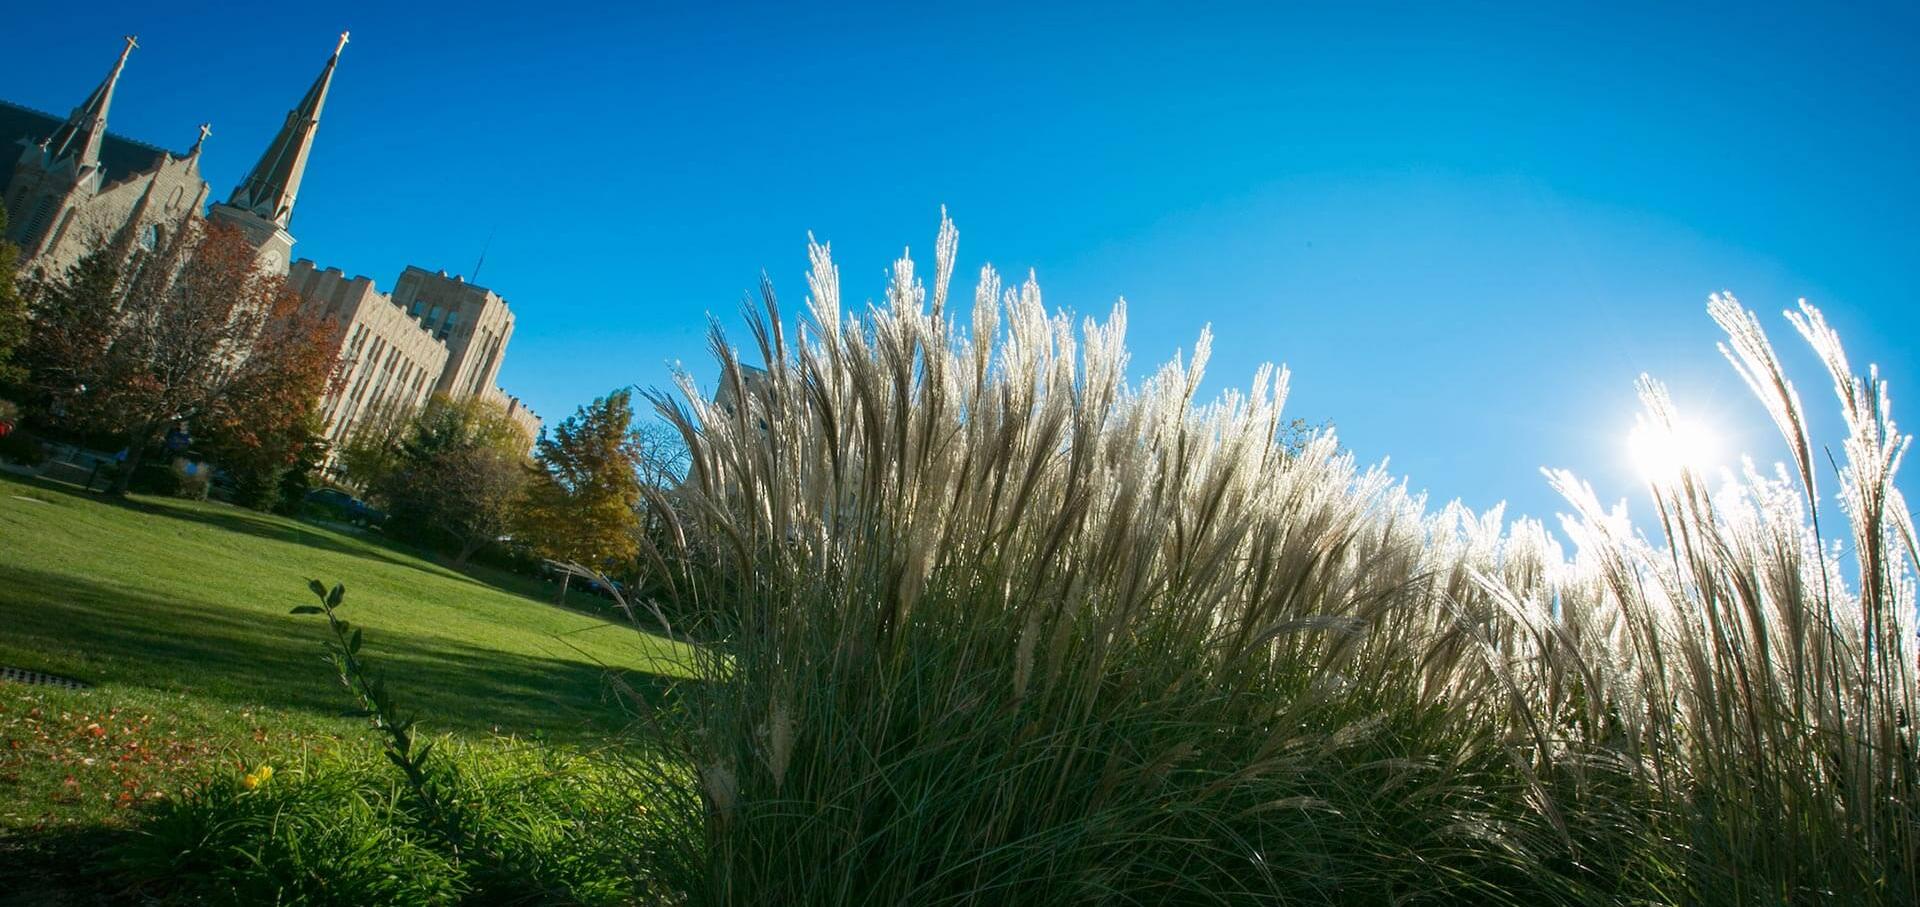 Campus landscape with decorative grasses